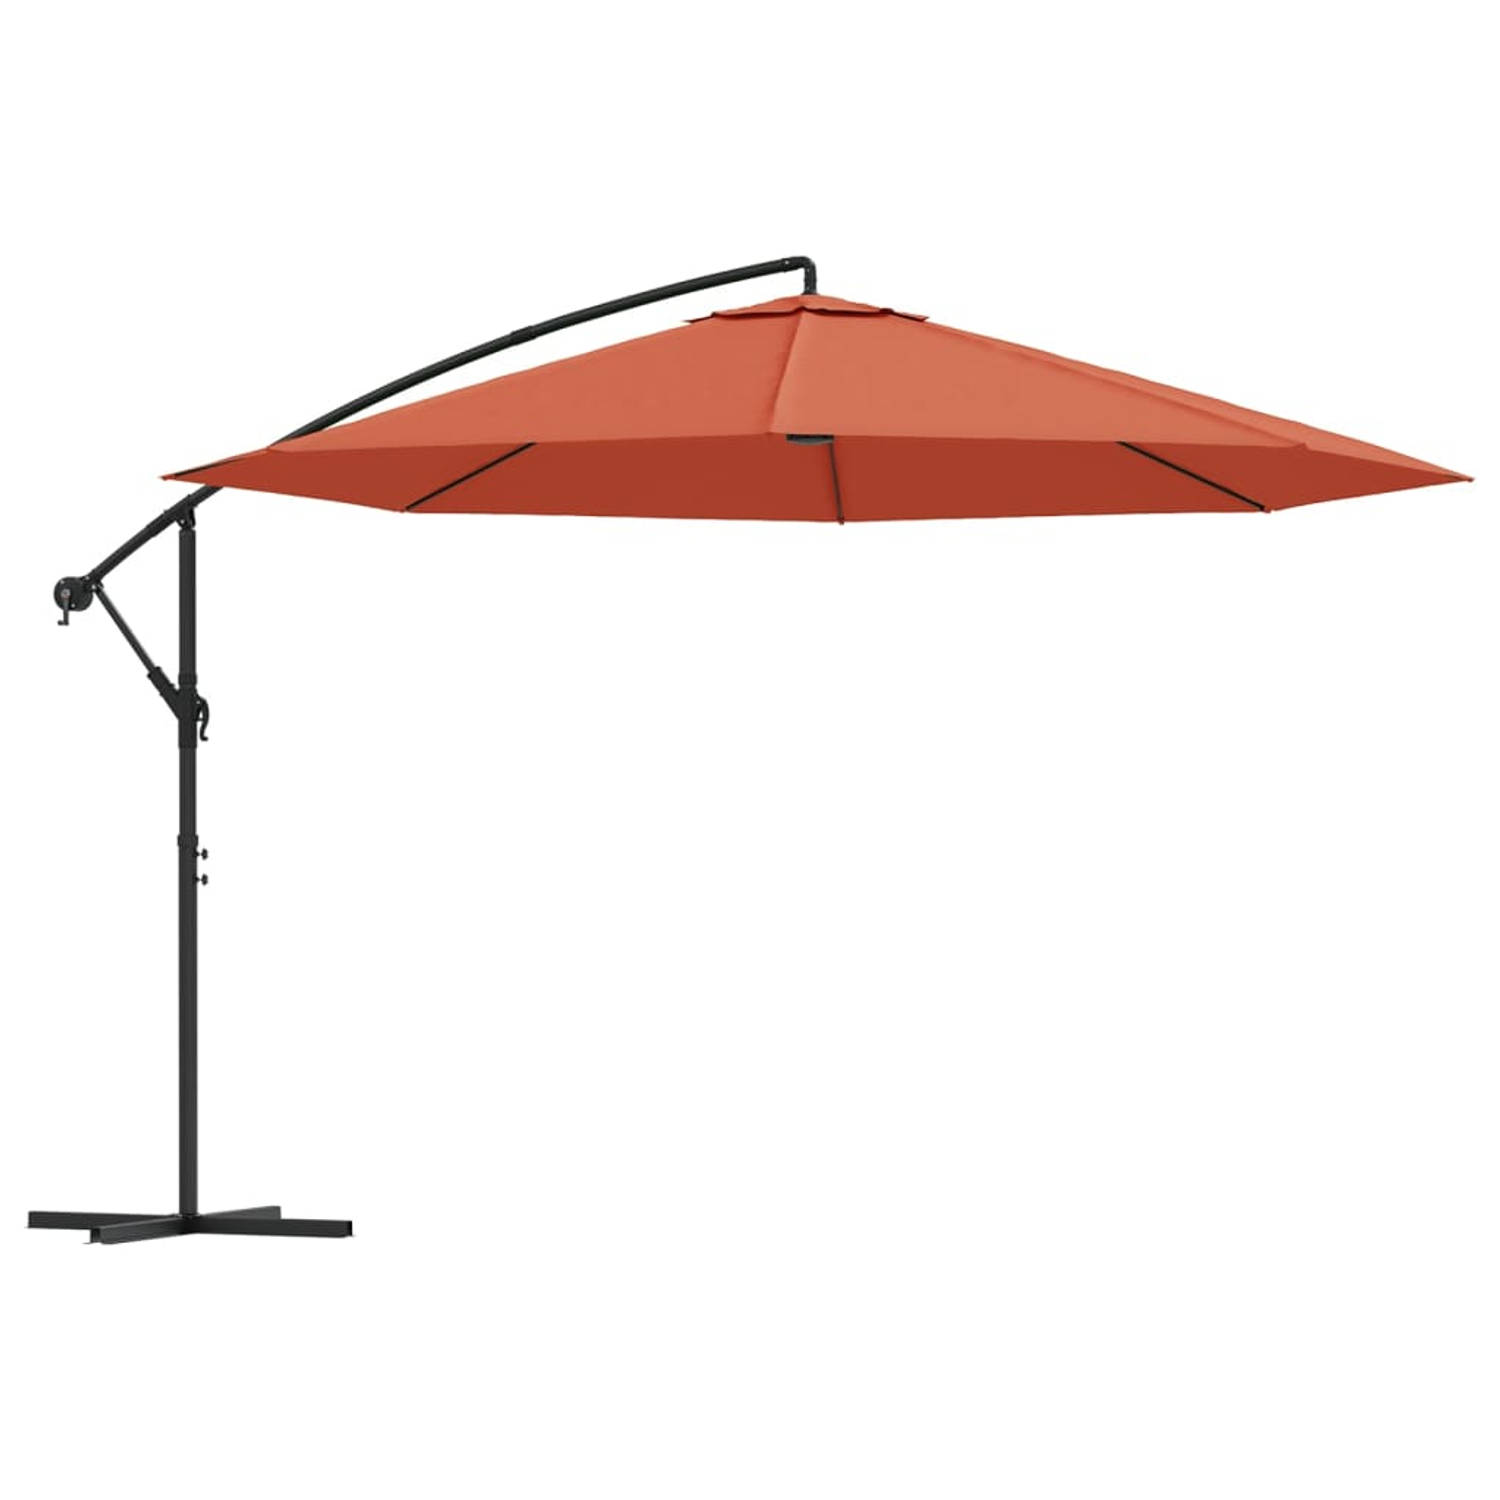 The Living Store Hangende Parasol Terracotta 350x268 cm - UV-Beschermend Polyester - Stabiele Kruisvoet - Exclusief Design